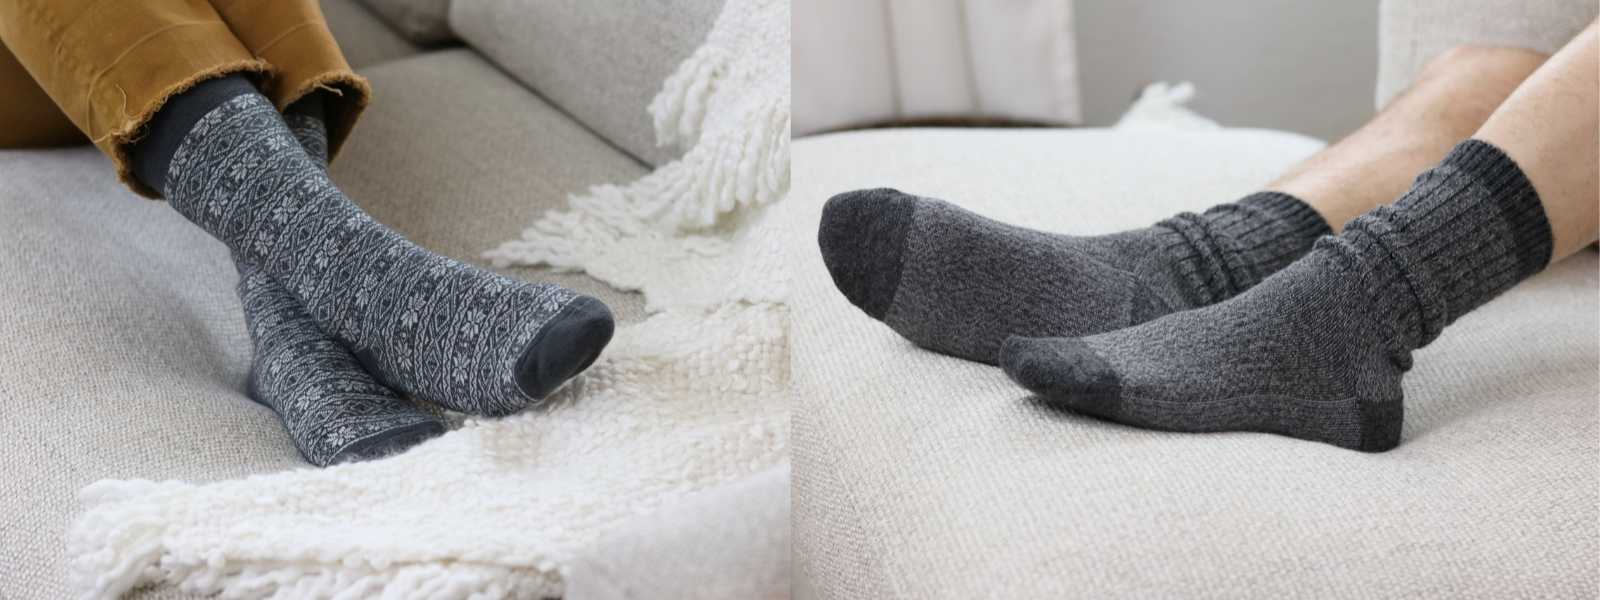 Nootkas alpaca socks - warm, insulating, sweat reducing and odor resistant. Machine washable wool.